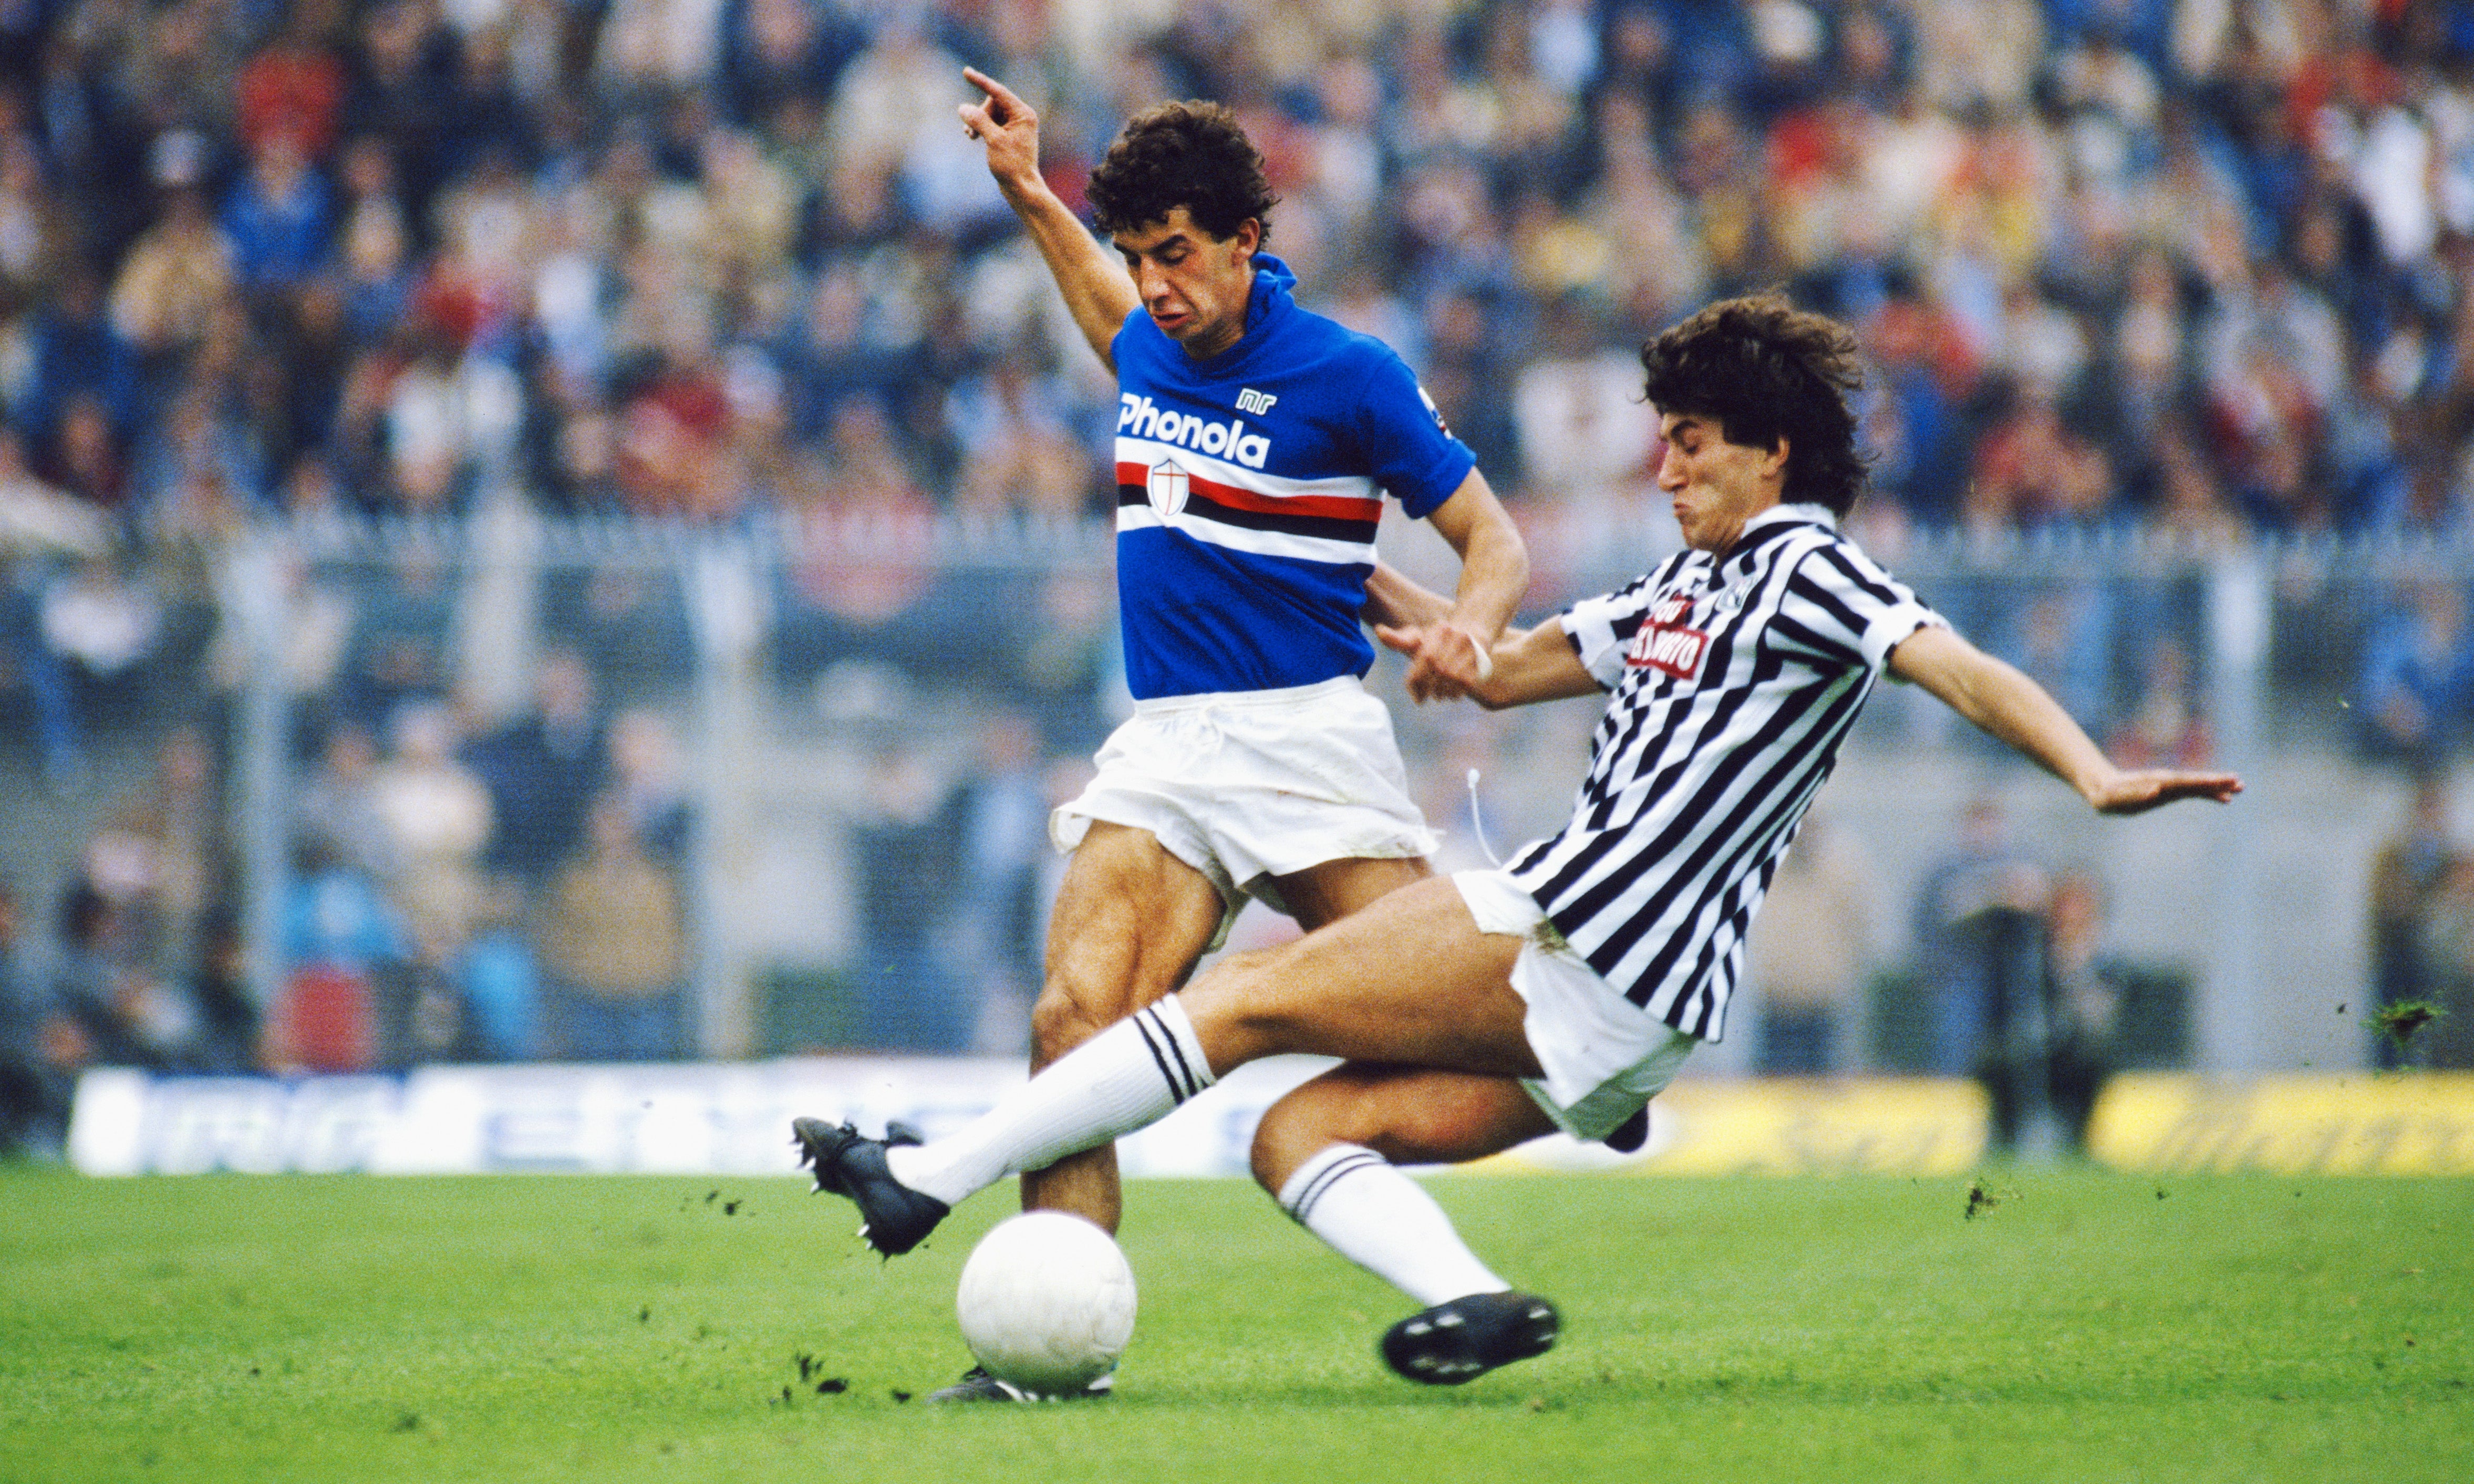 Vialli in action for Sampdoria against Genoa, 1984